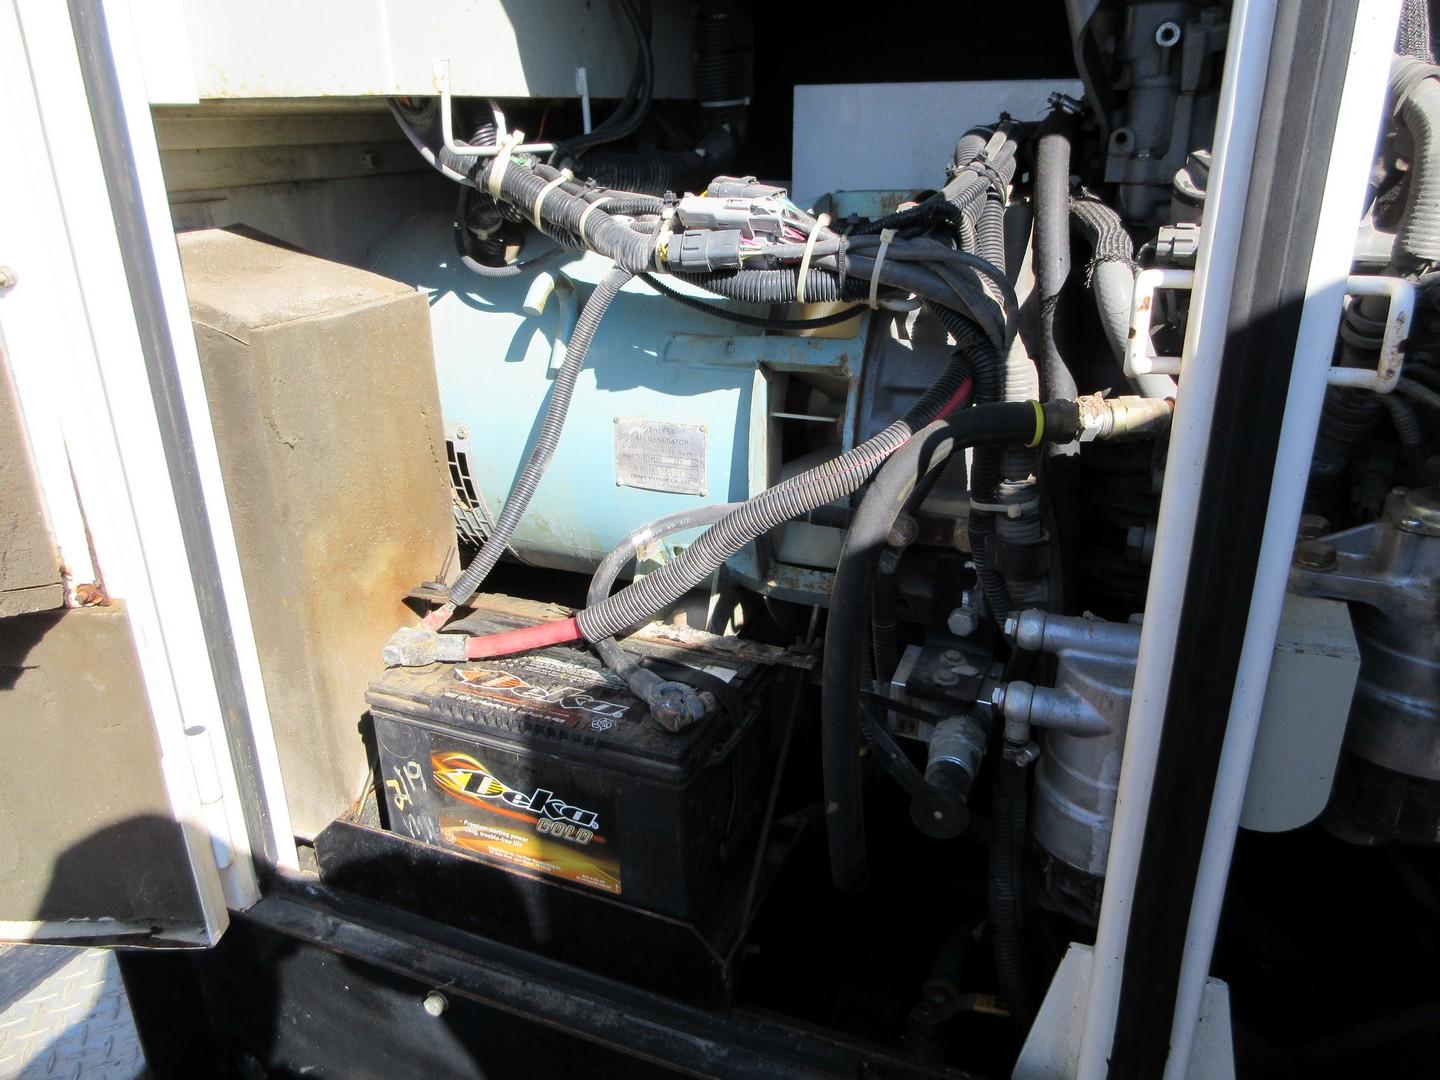 2015 Multiquip DCA45SS1U4F Tow Behind Generator